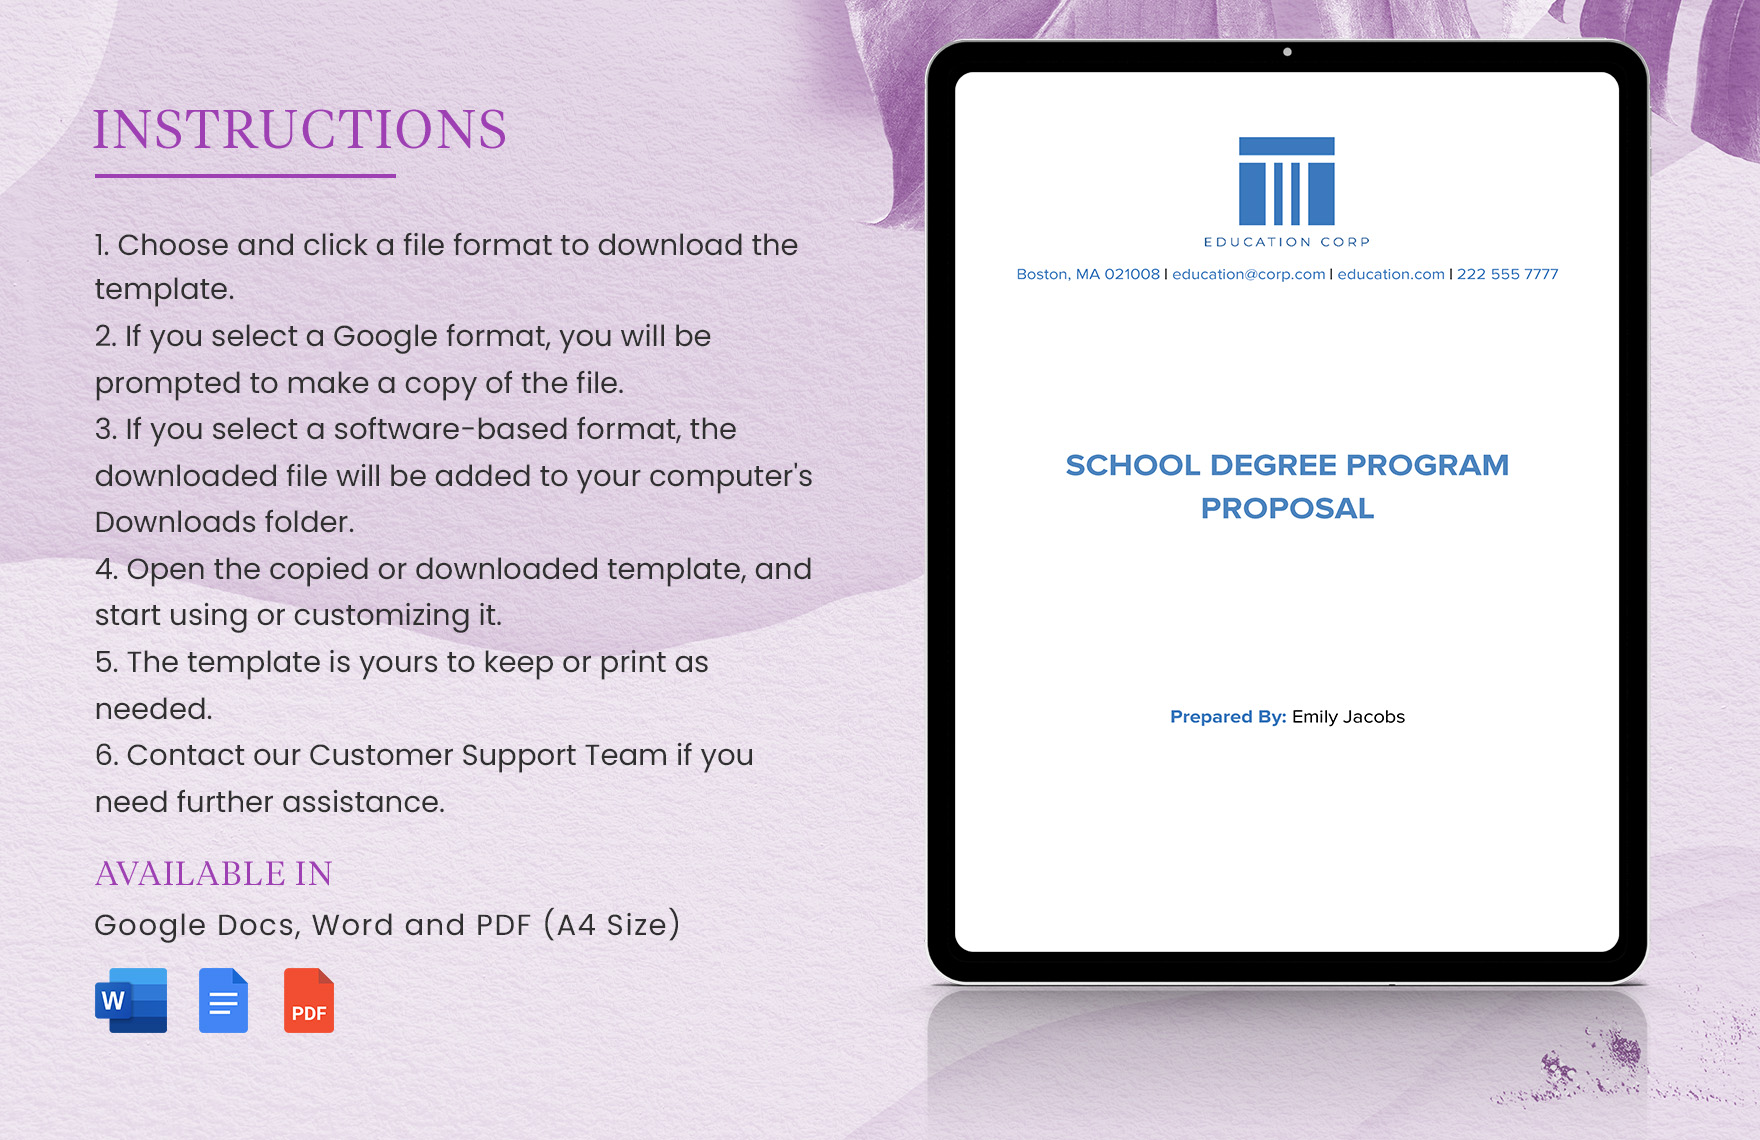 School Degree Program Proposal Template